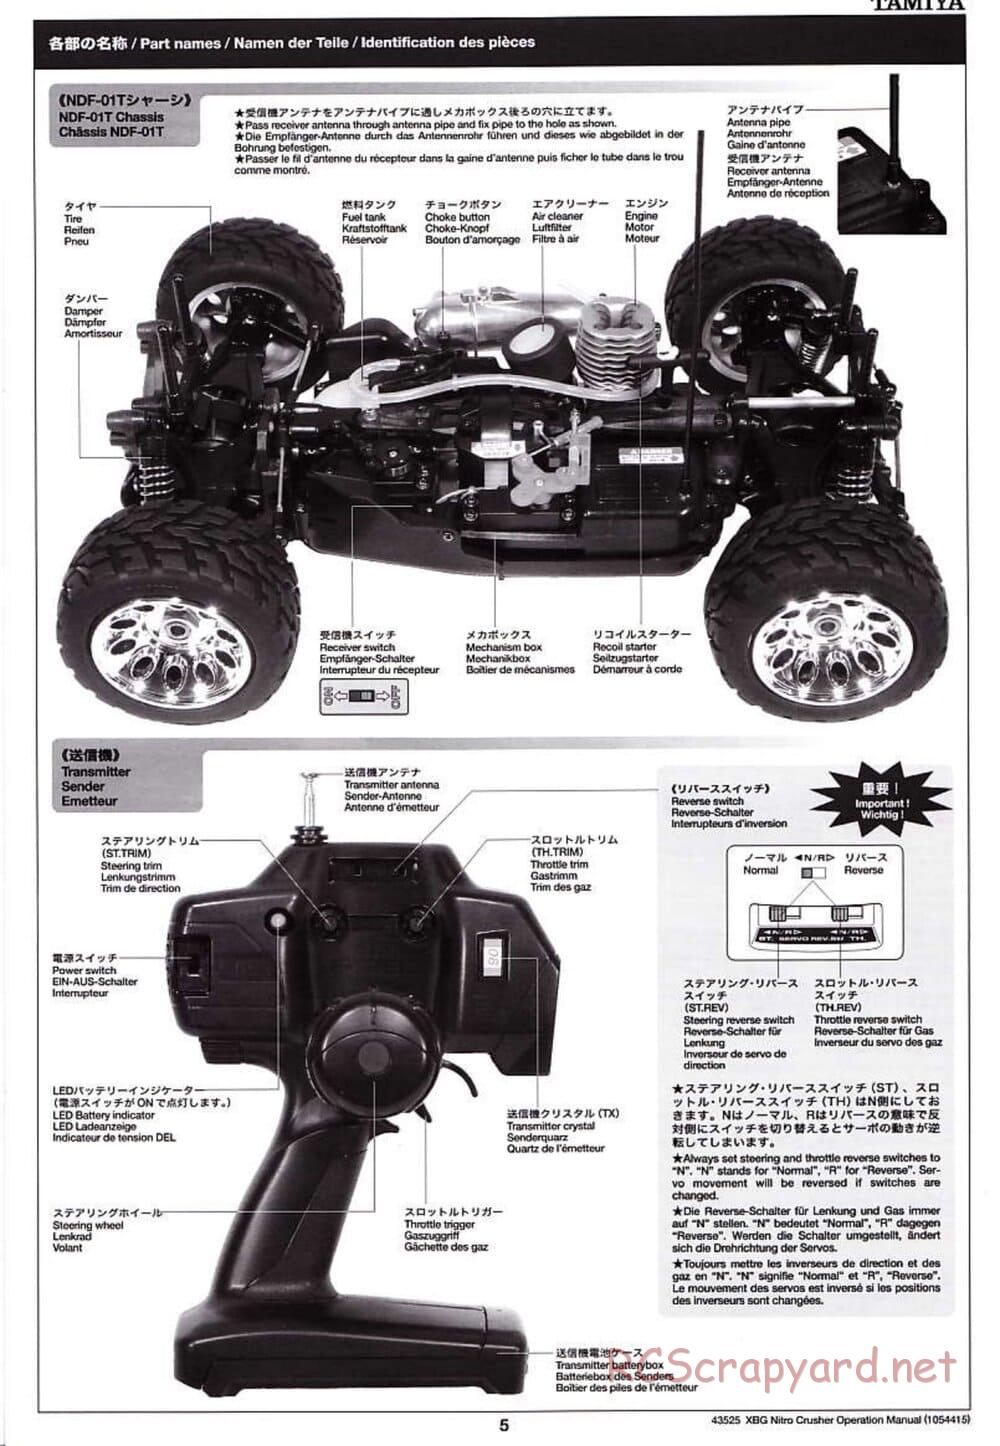 Tamiya - Nitro Crusher - NDF-01T - Operating Manual - Page 5